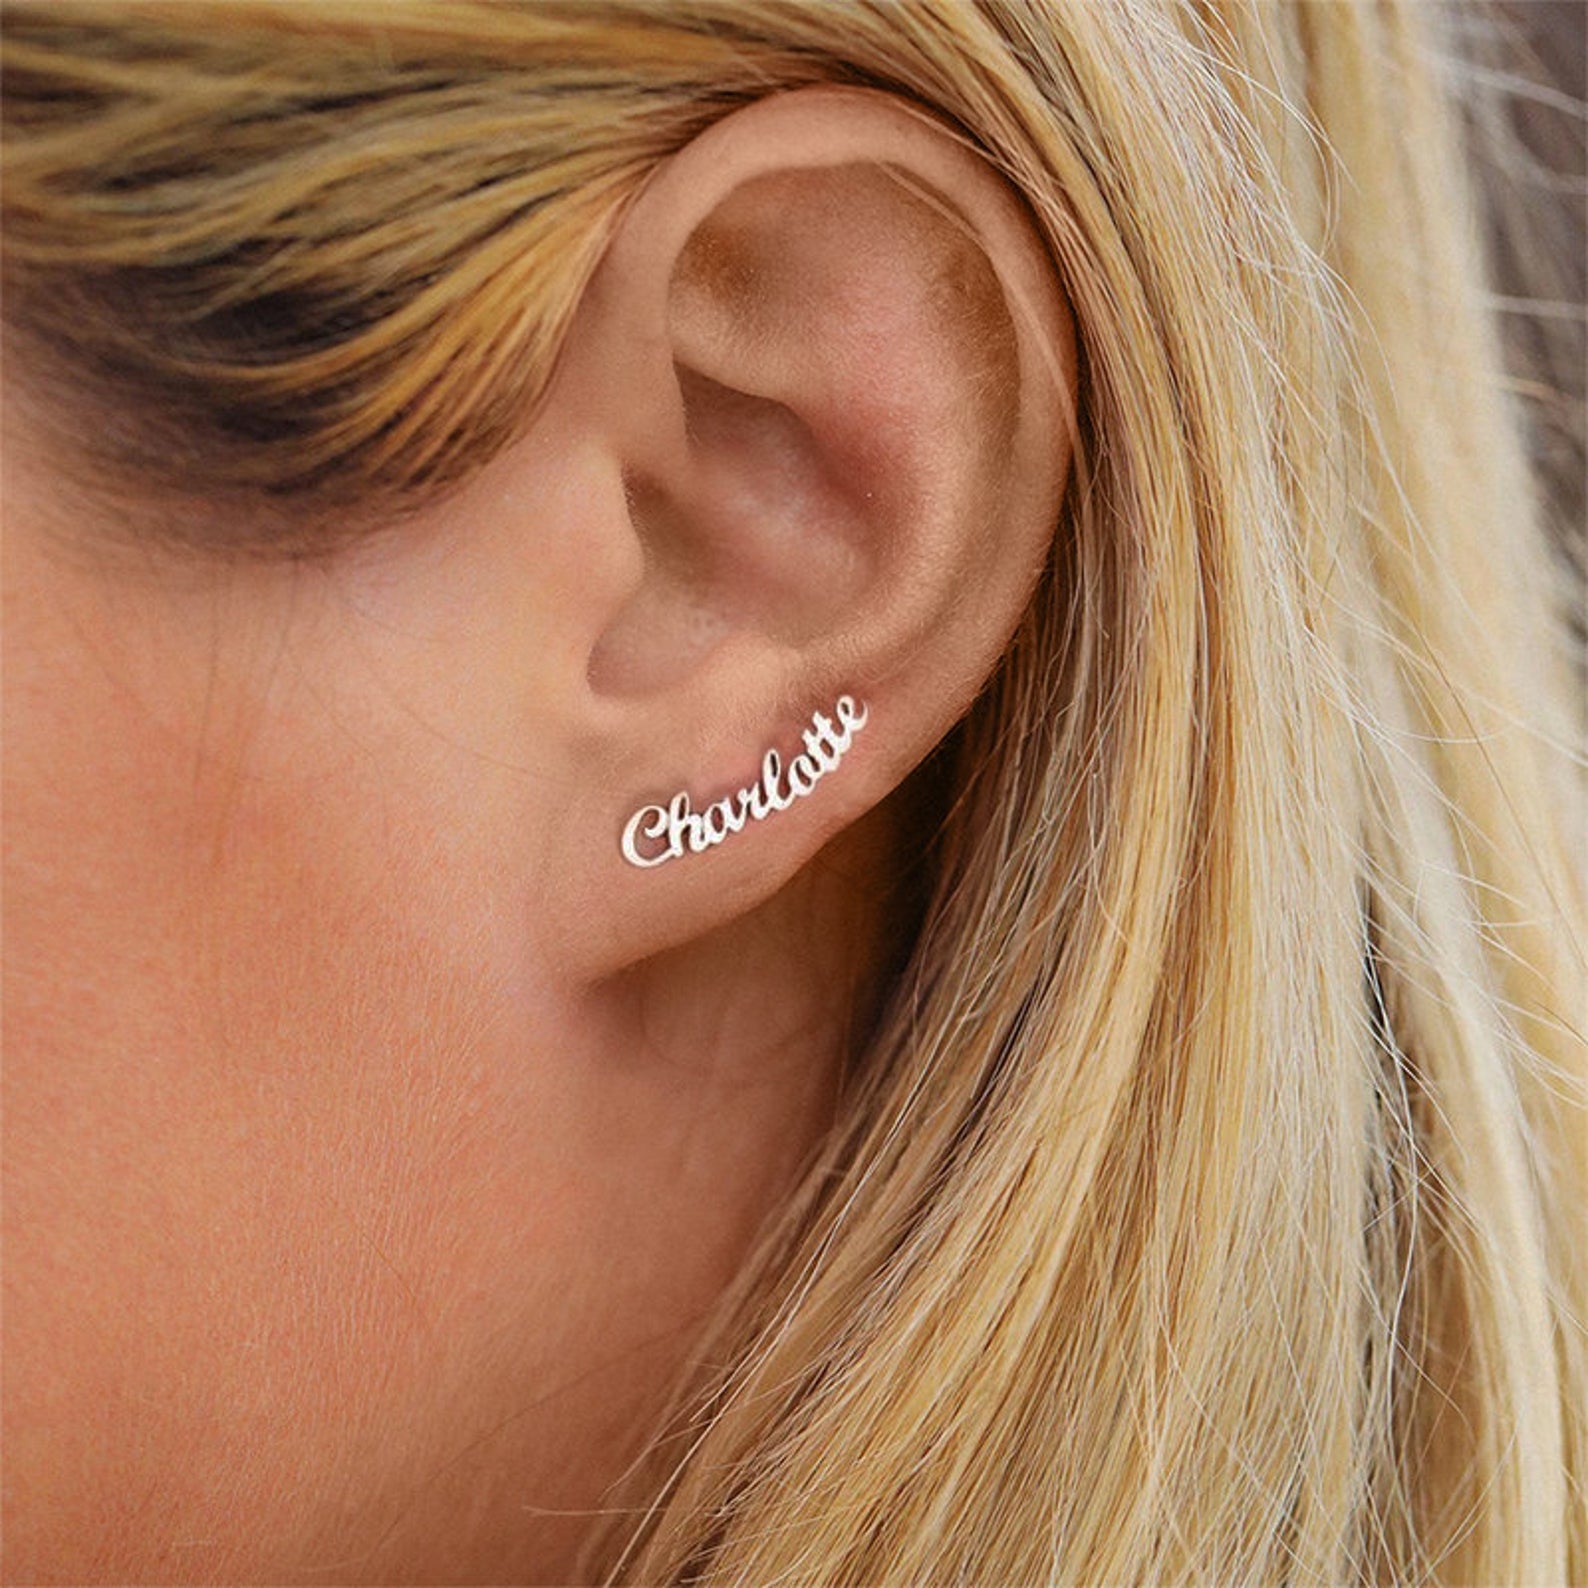 customised stud name earrings uk